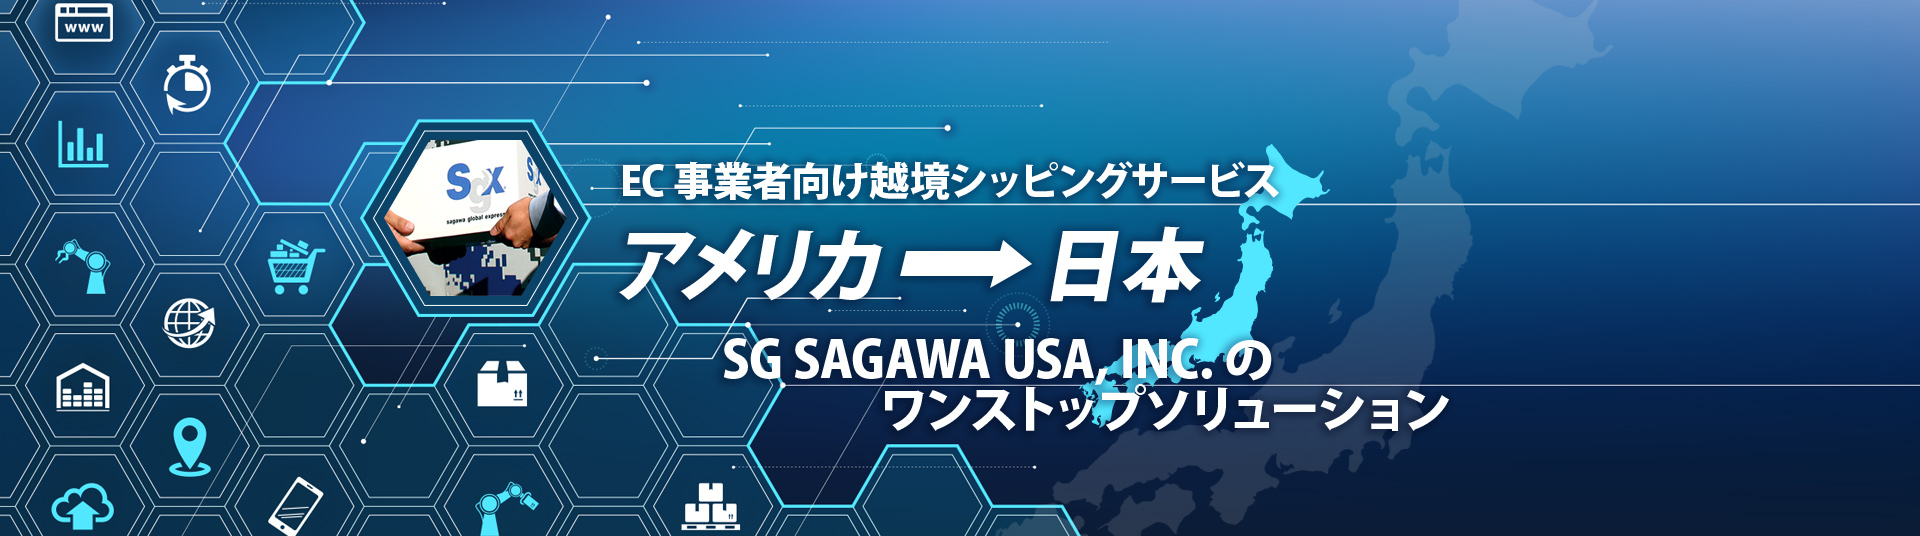 EC事業者向け越境シッピングサービス、米国から日本、SG SAGAWA USA, INC.のワンストップソリューション